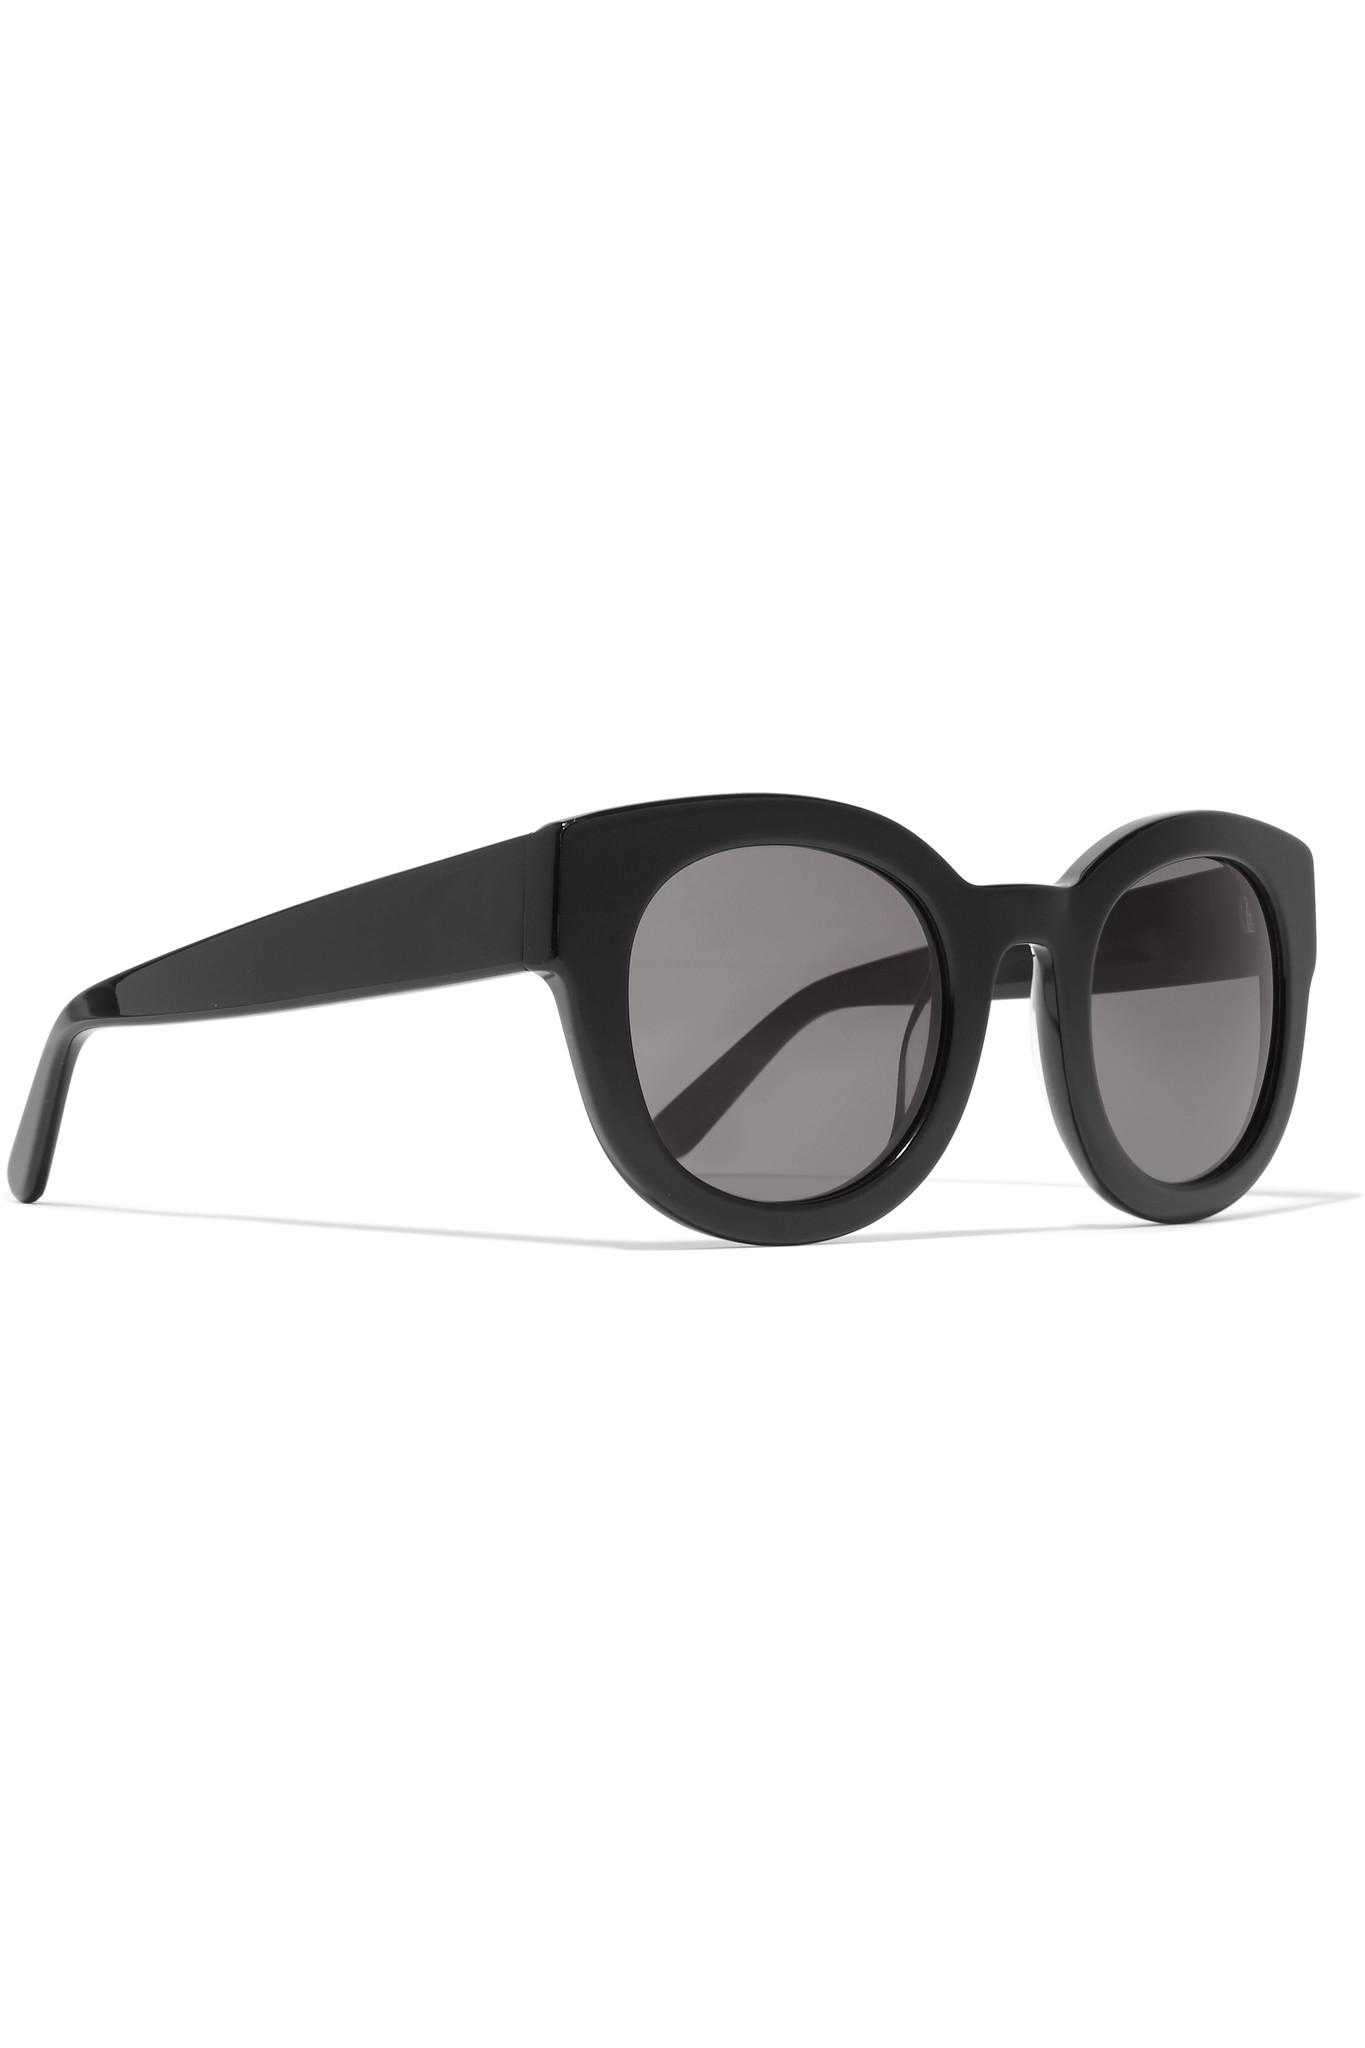 Ganni Fay Cat-eye Acetate Sunglasses in Black - Lyst